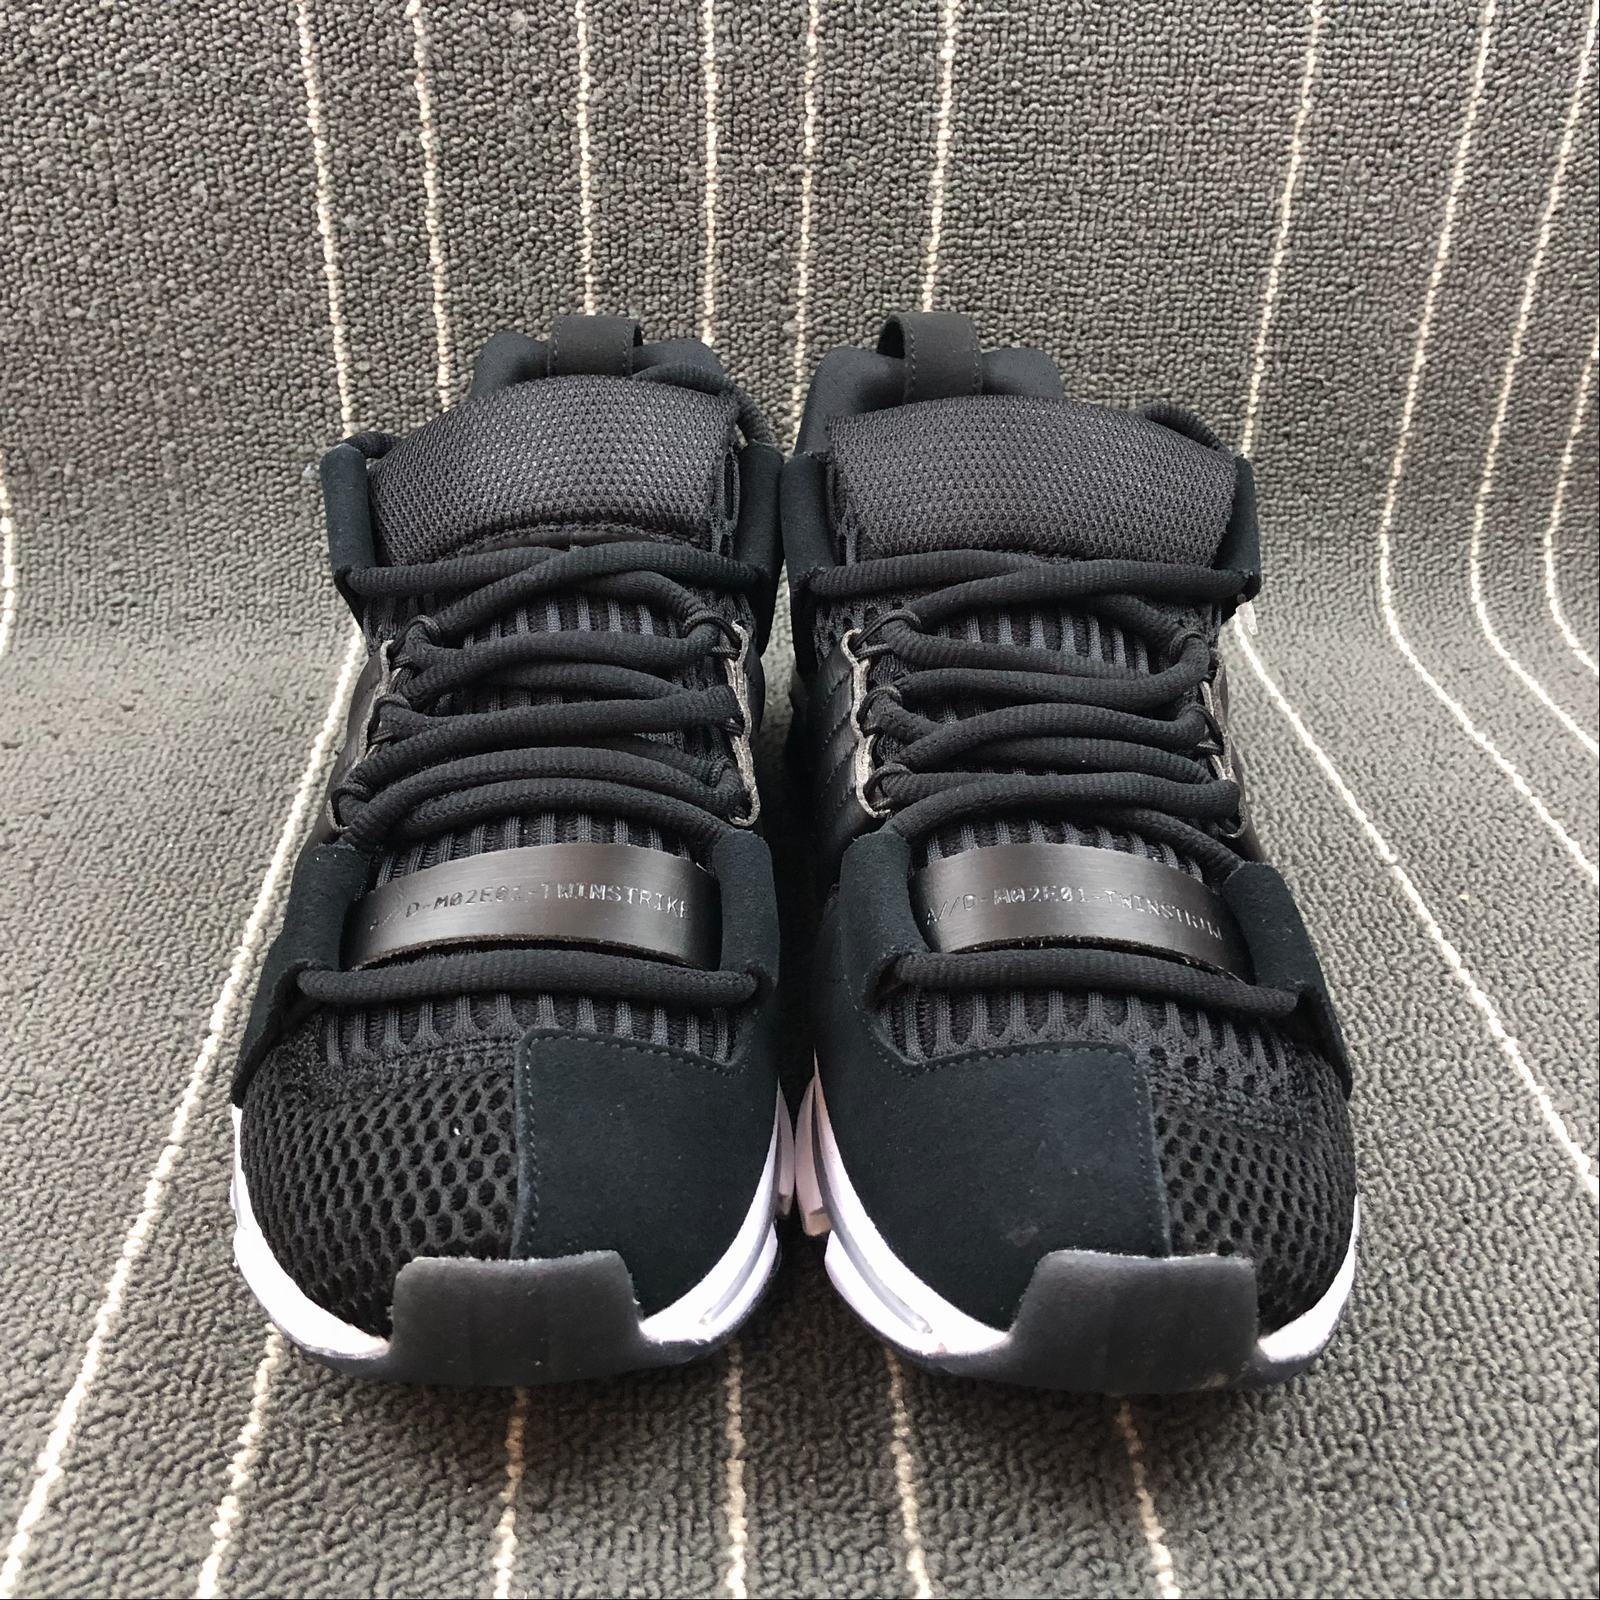 adidas twinstrike black